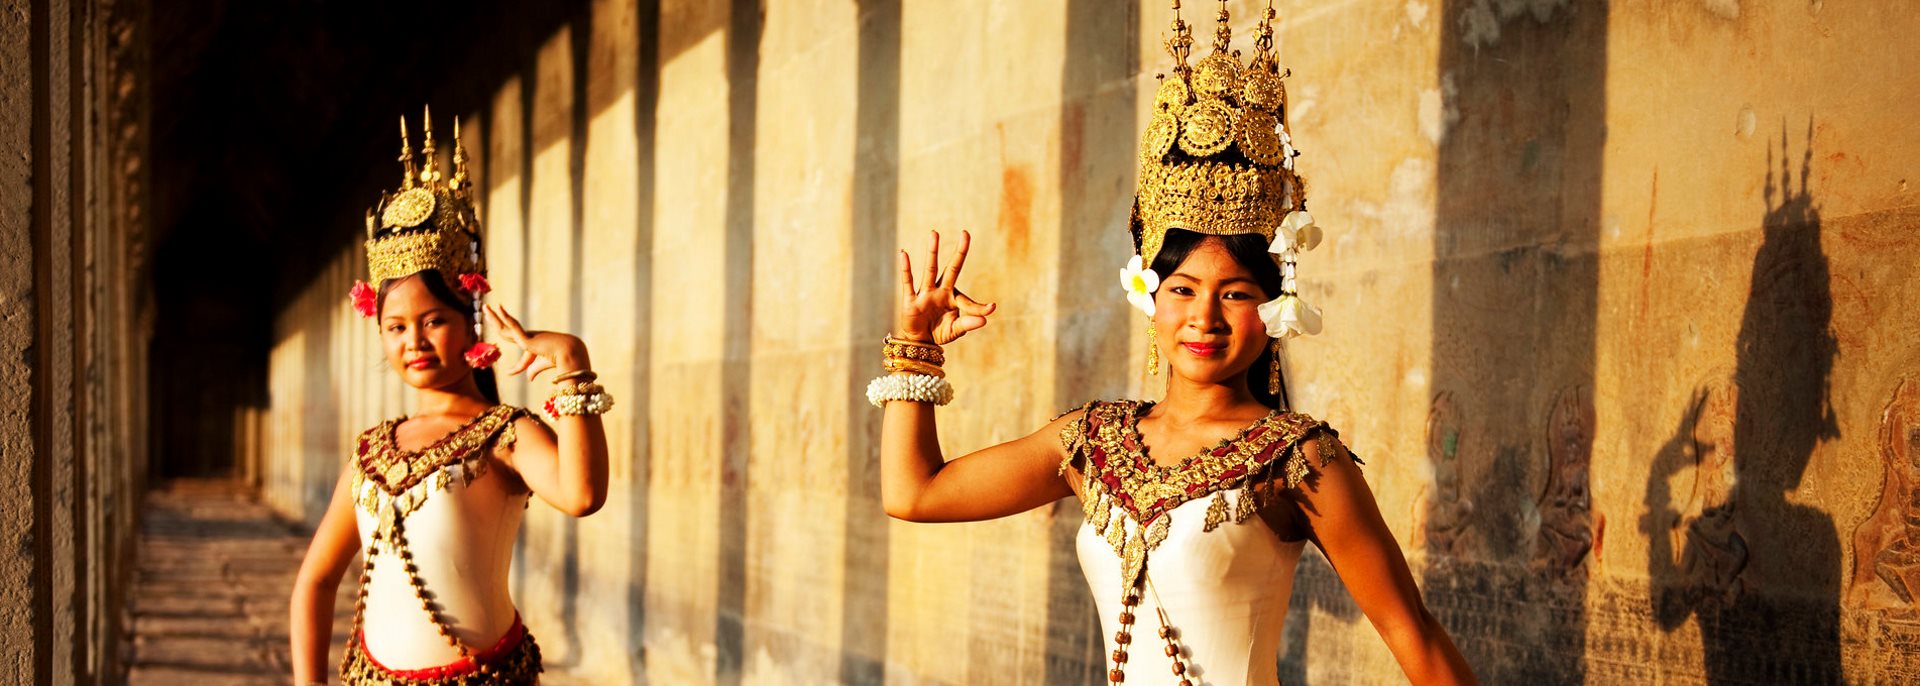 Classic Culture Cambodia